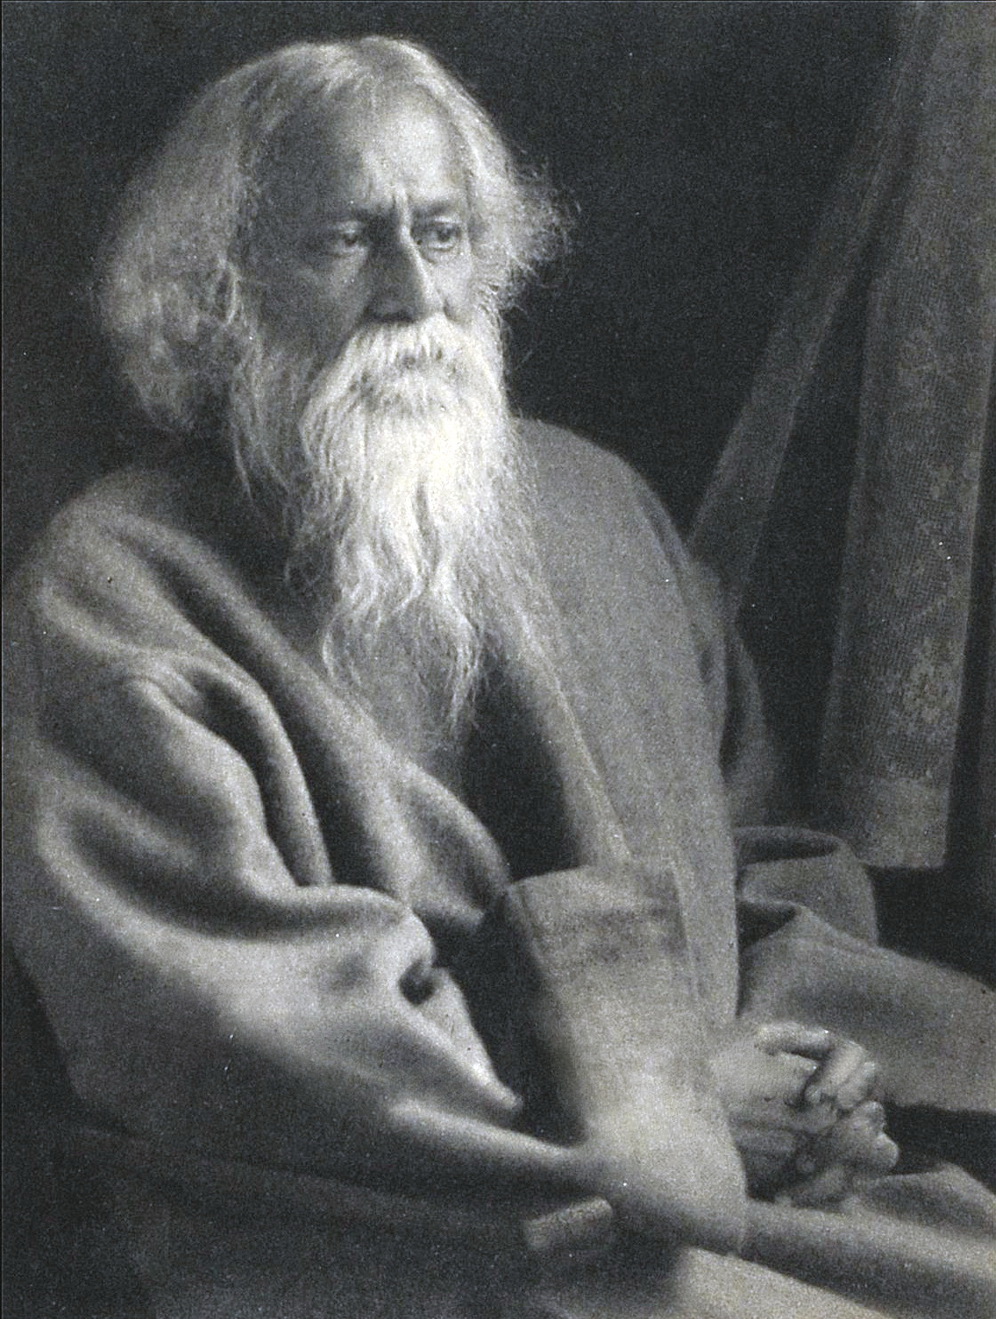 Rabindranath Tagore - 7. Mai 1861 - 7. August 1941